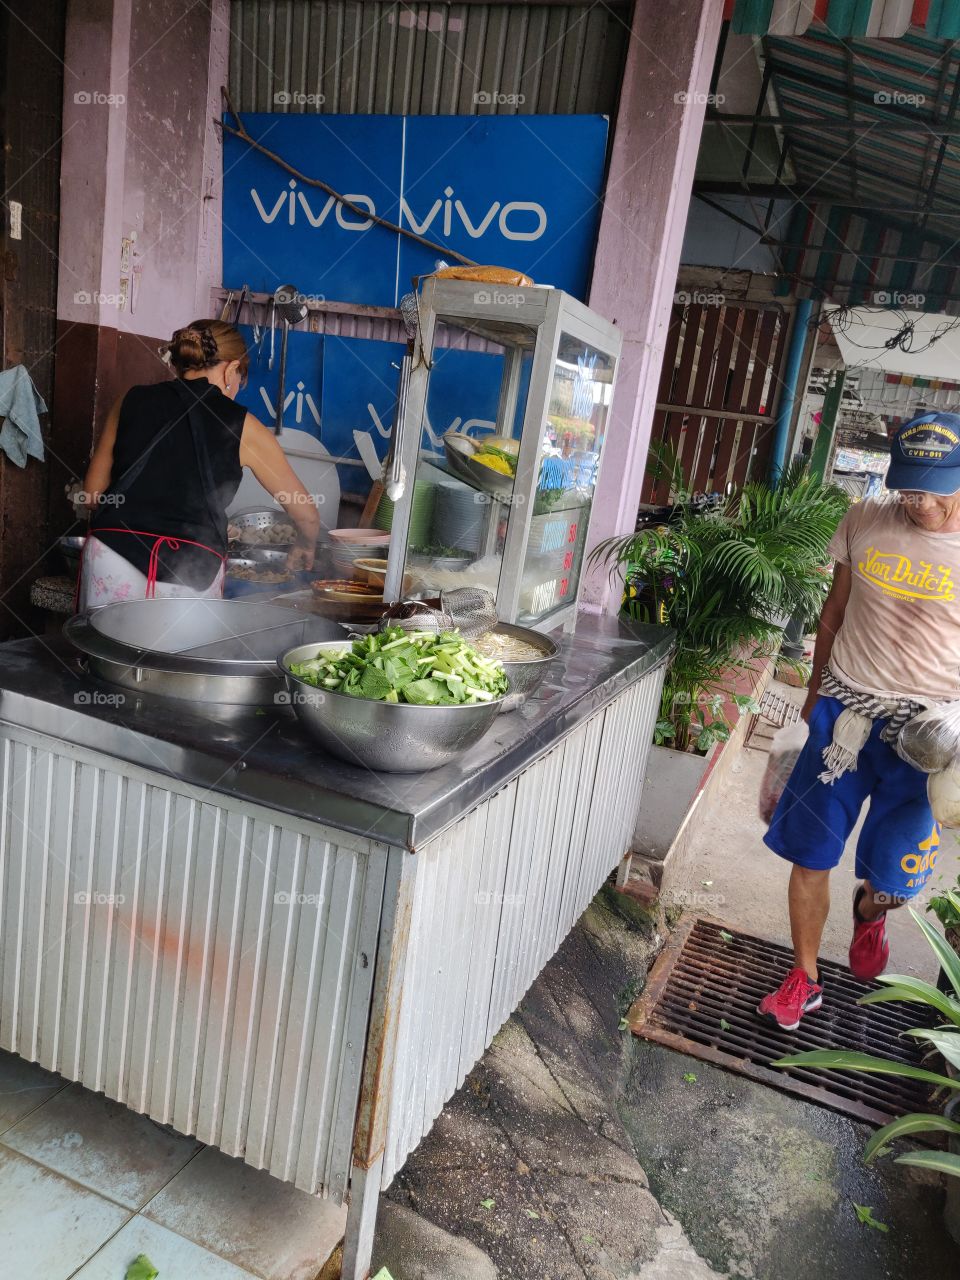 Thai beef noodle Street food shop